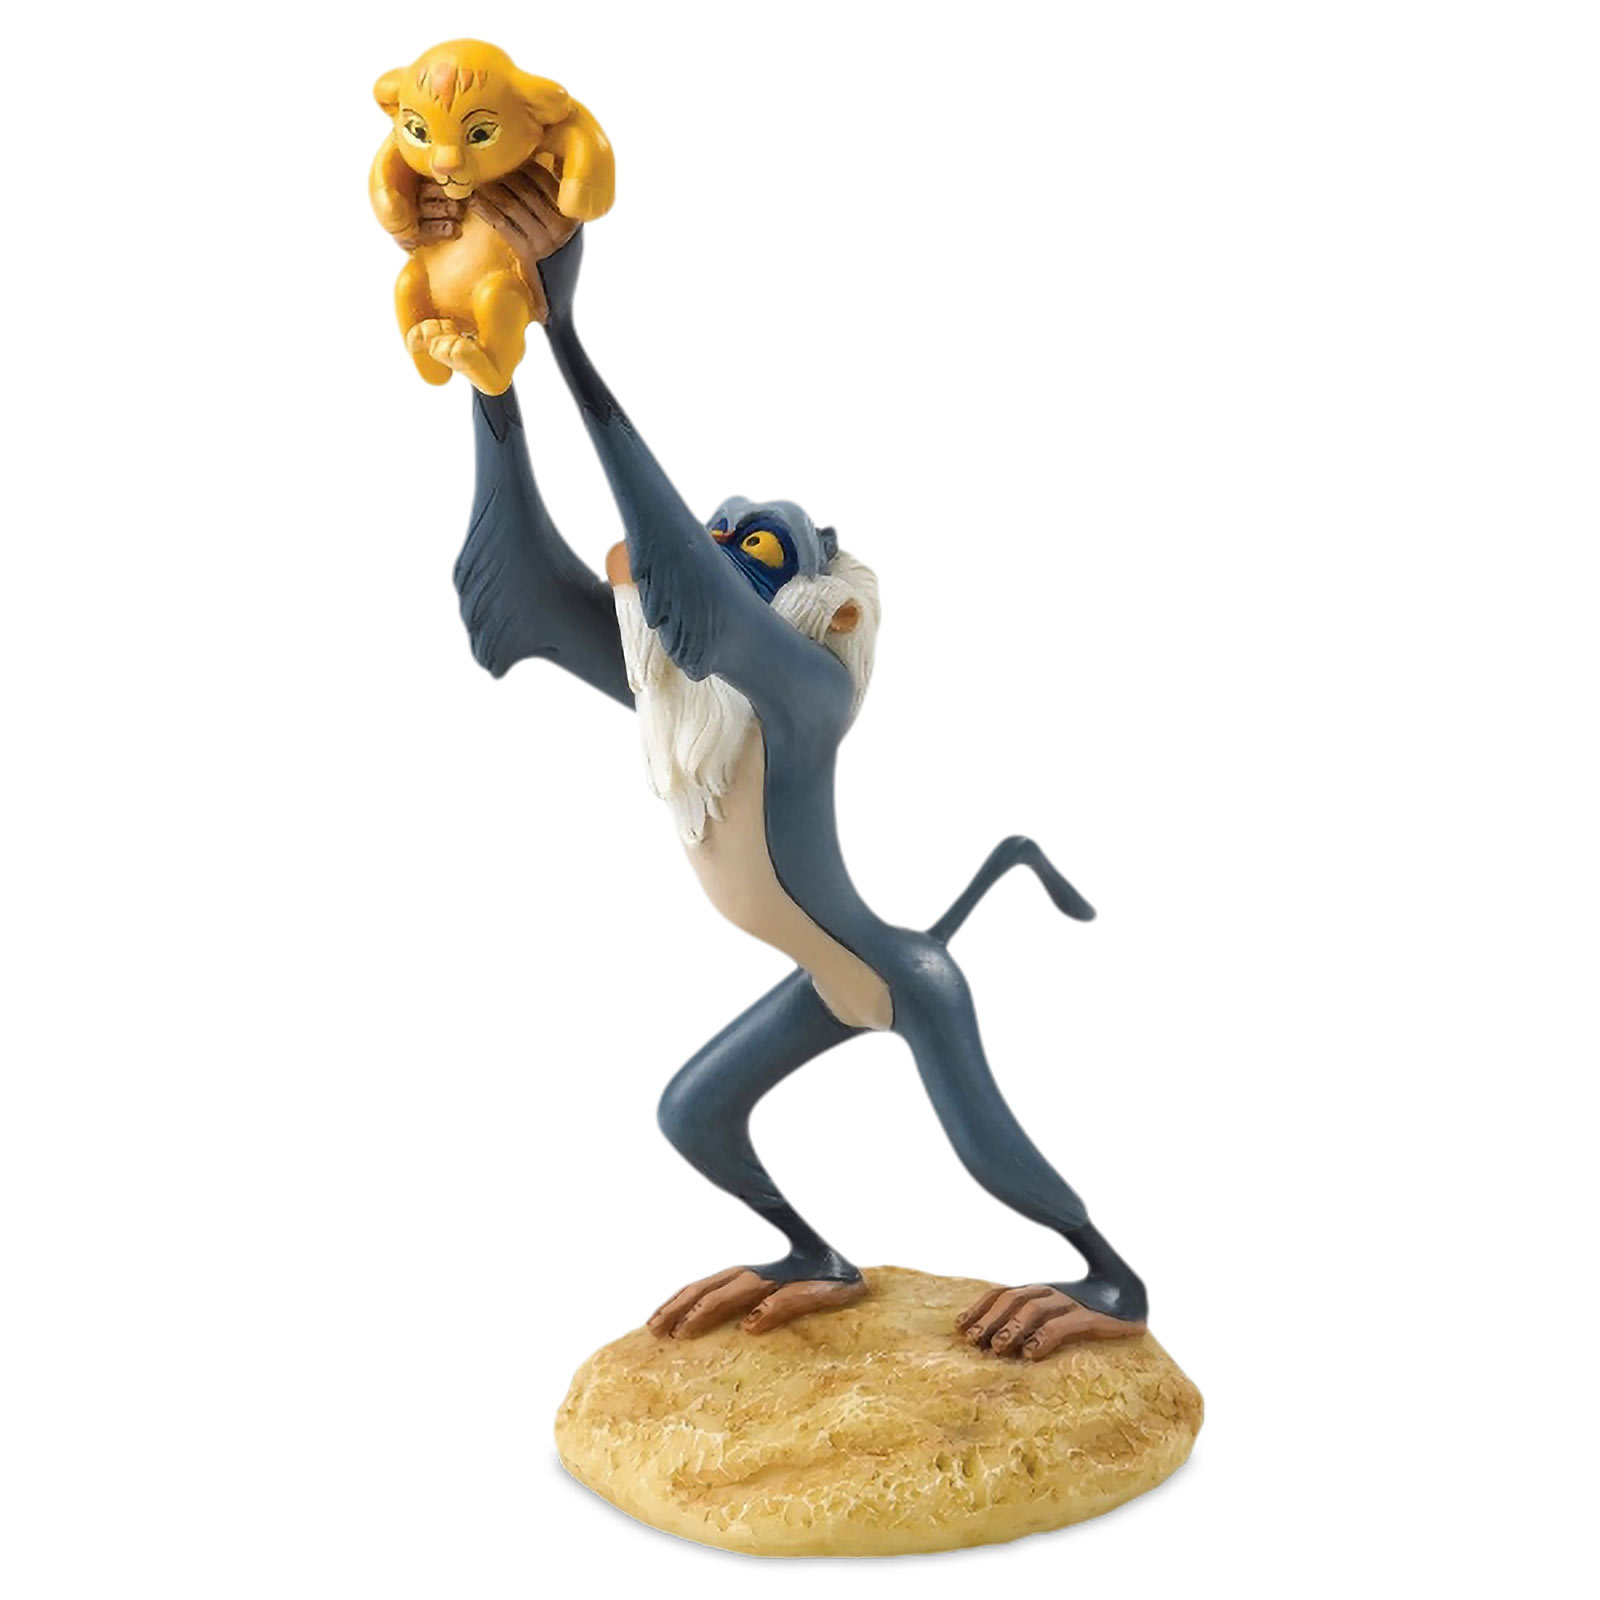 The Lion King - Rafiki with Simba figure